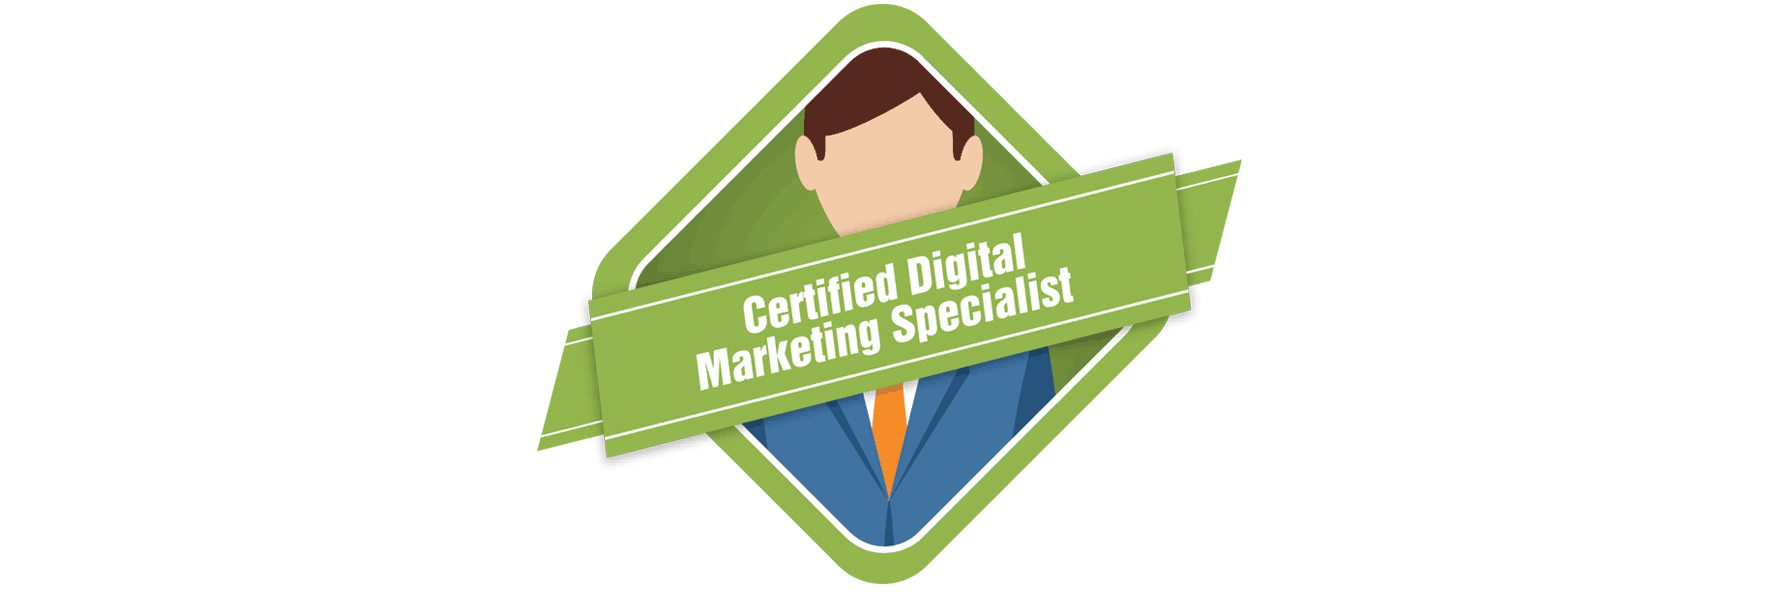 Certified Digital Marketing Specialist Program by Janette Toral